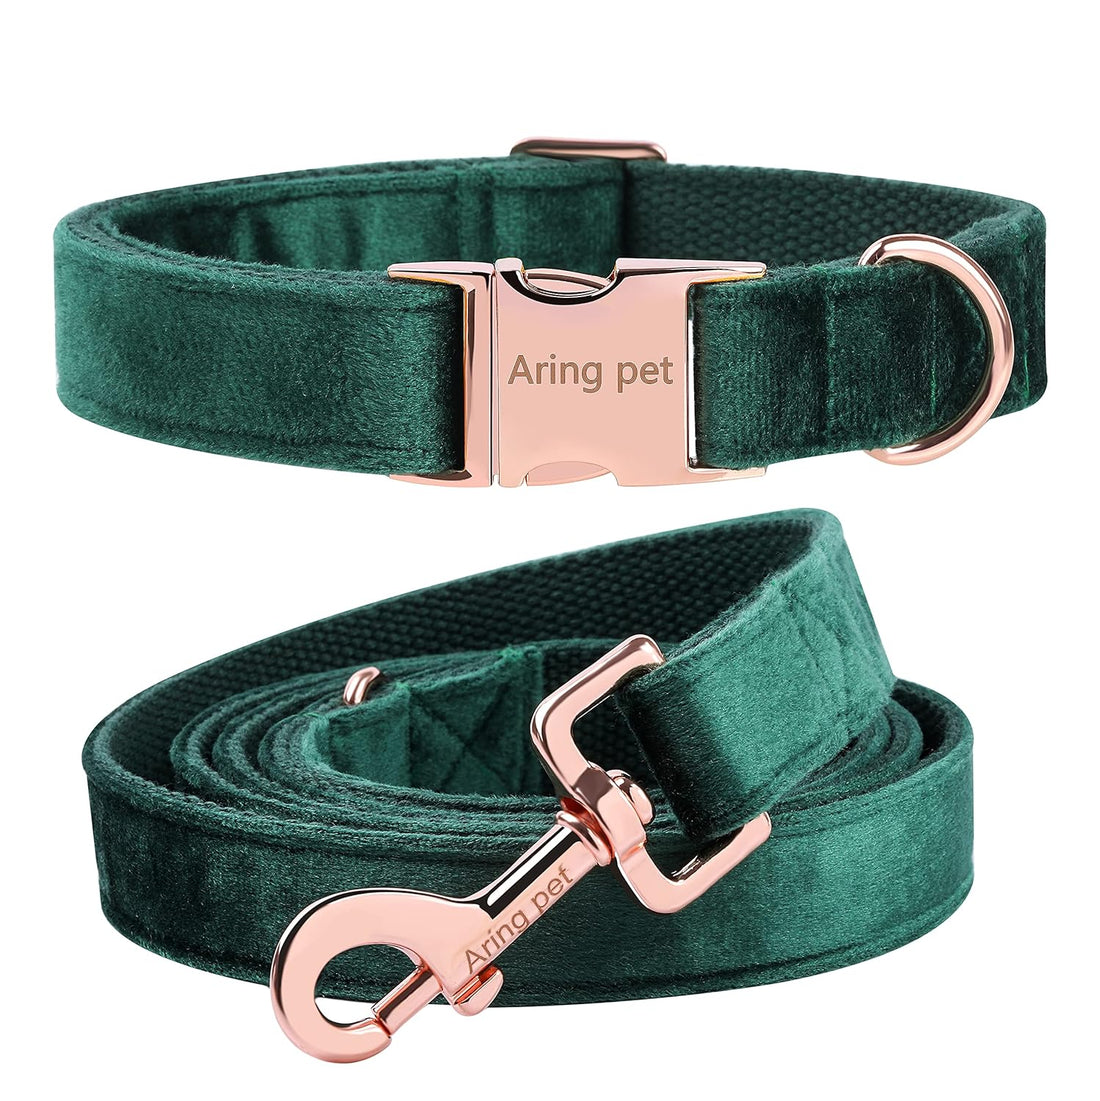 ARING PET Velvet Dog Collar and Leash Set, Soft Dog Collar and Leash, Adjustable Collars for Dogs